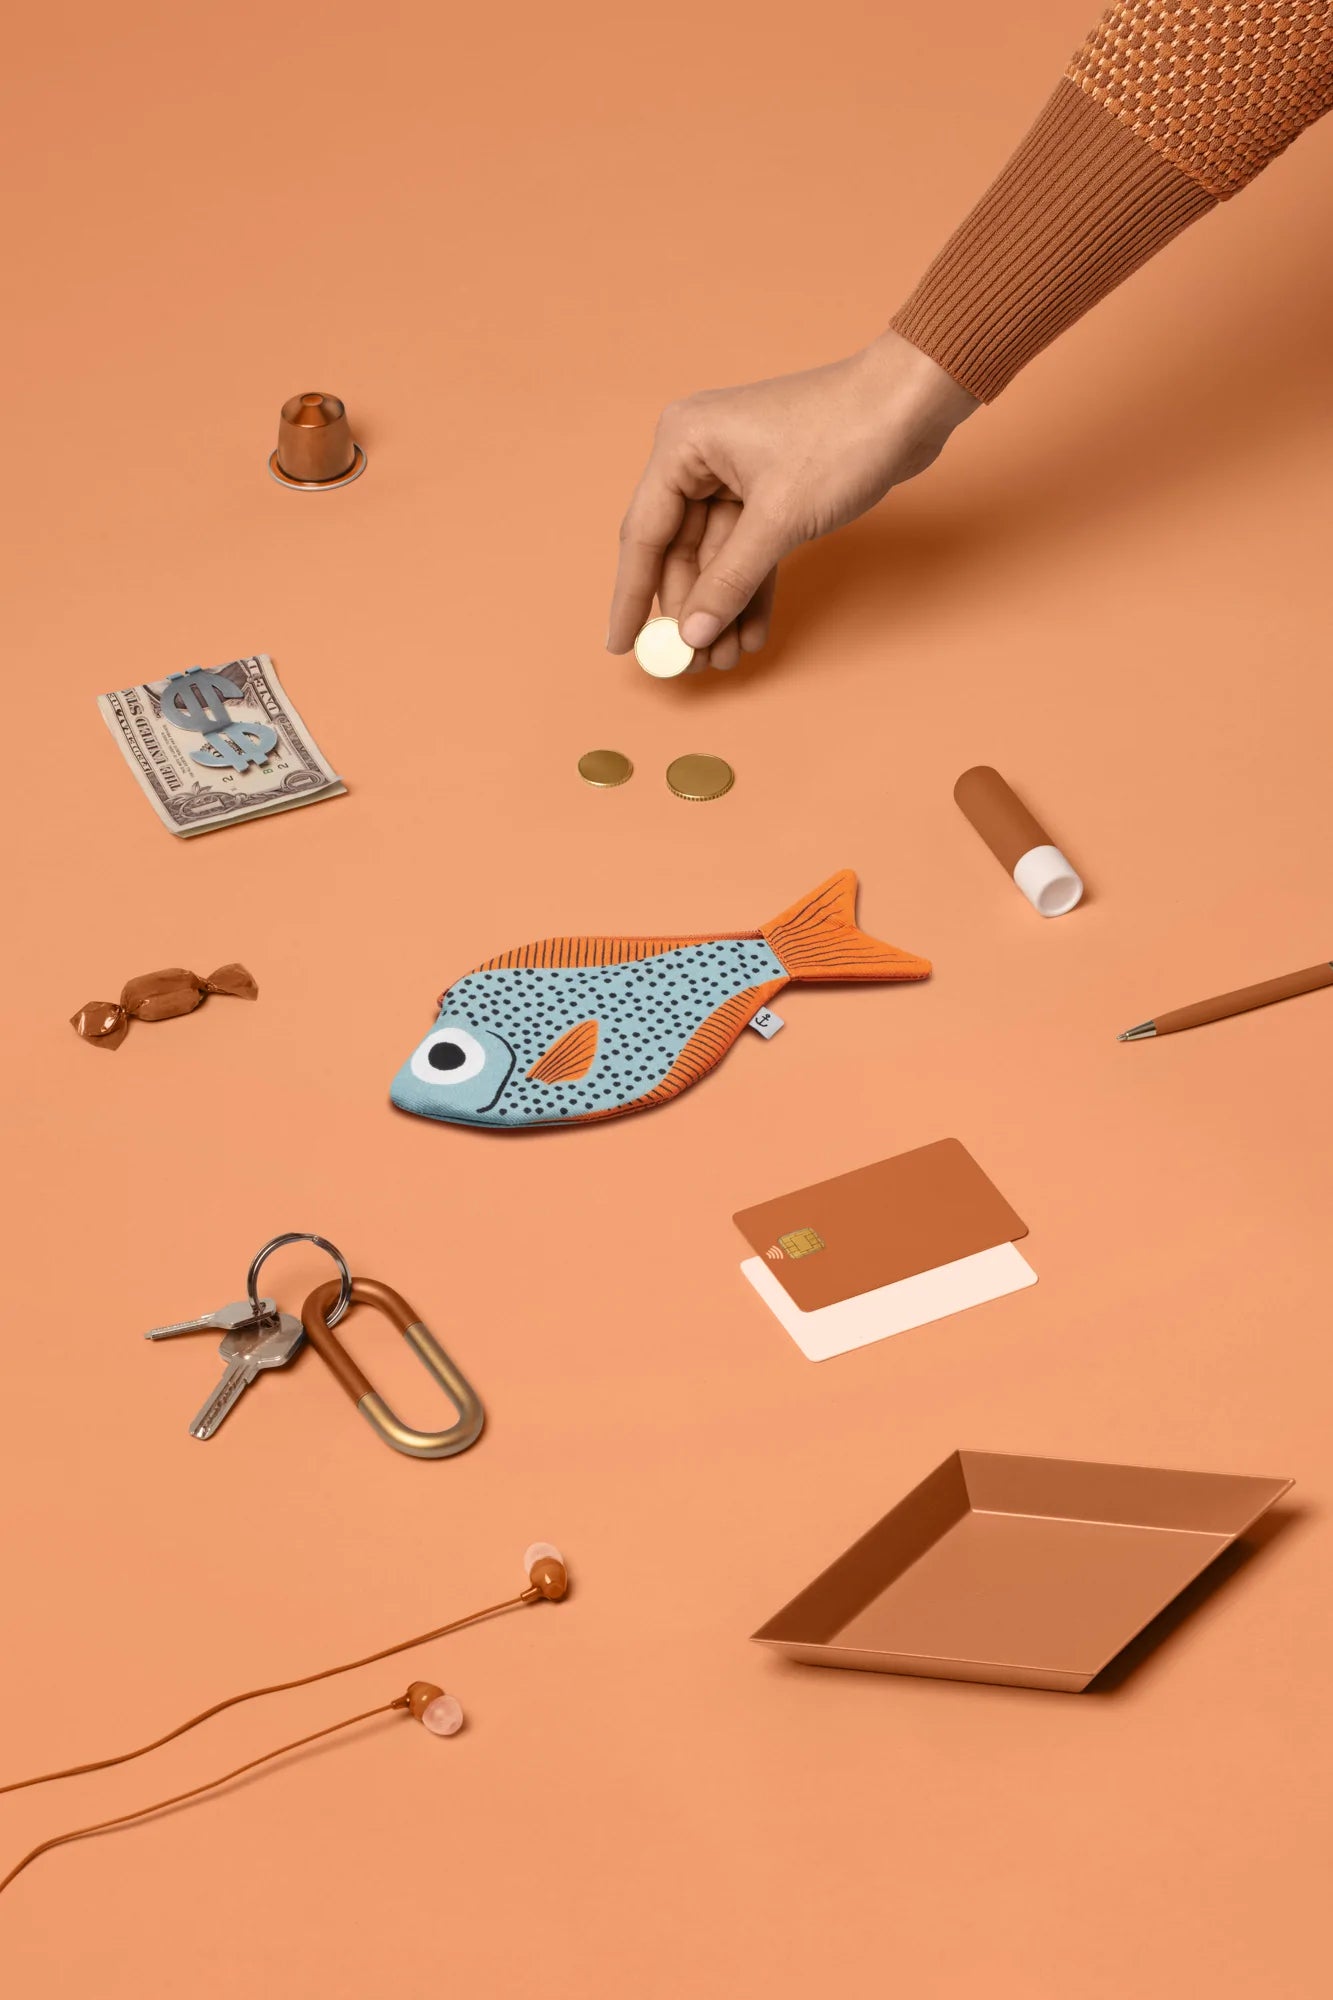 Aqua Sweeper fish purse or keychain